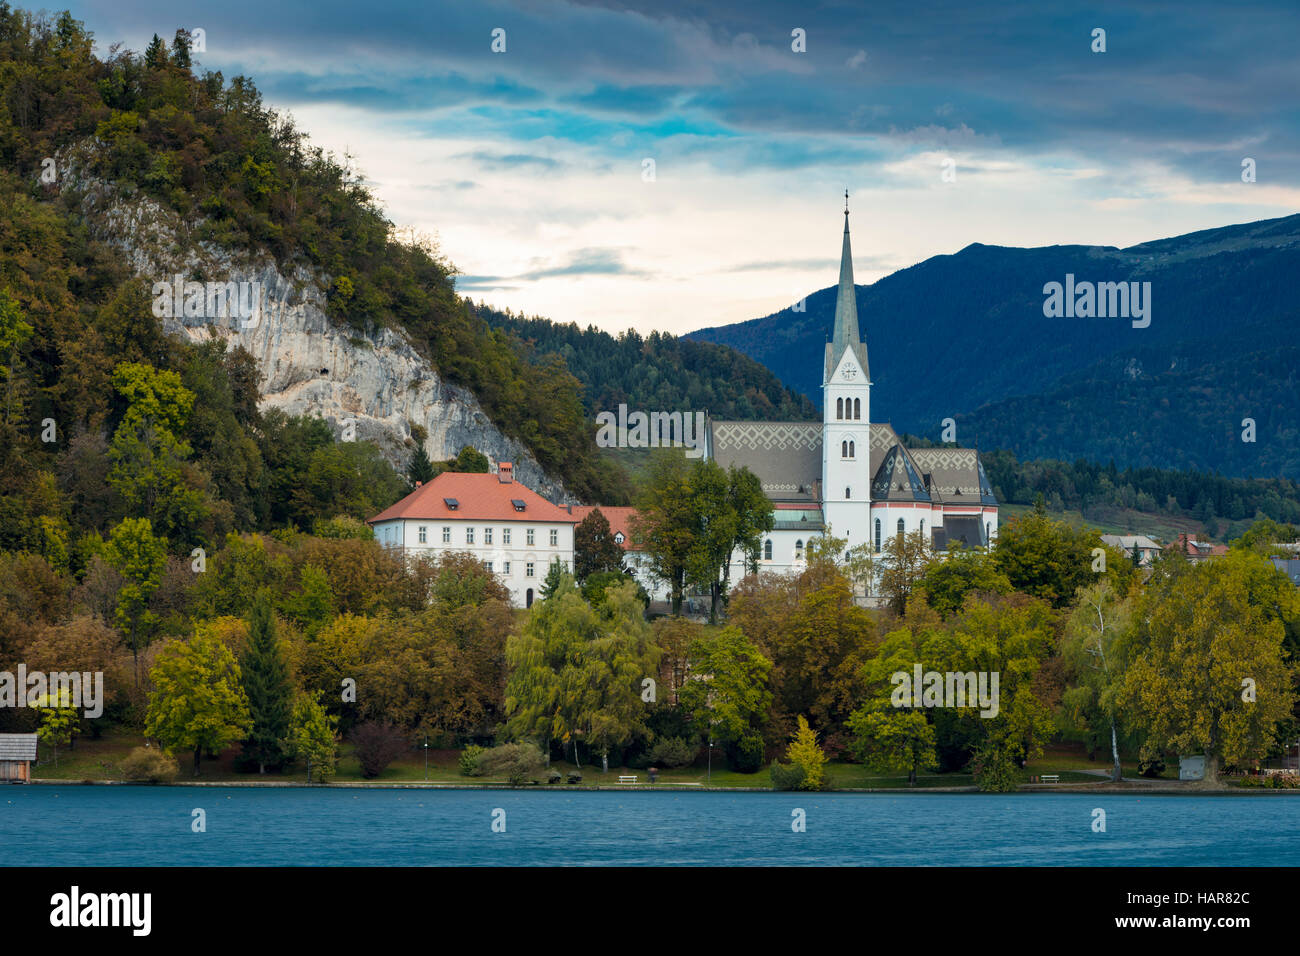 Abend über St Martins Pfarrkirche entlang See Bled, Bled, Oberkrain, Slowenien Stockfoto